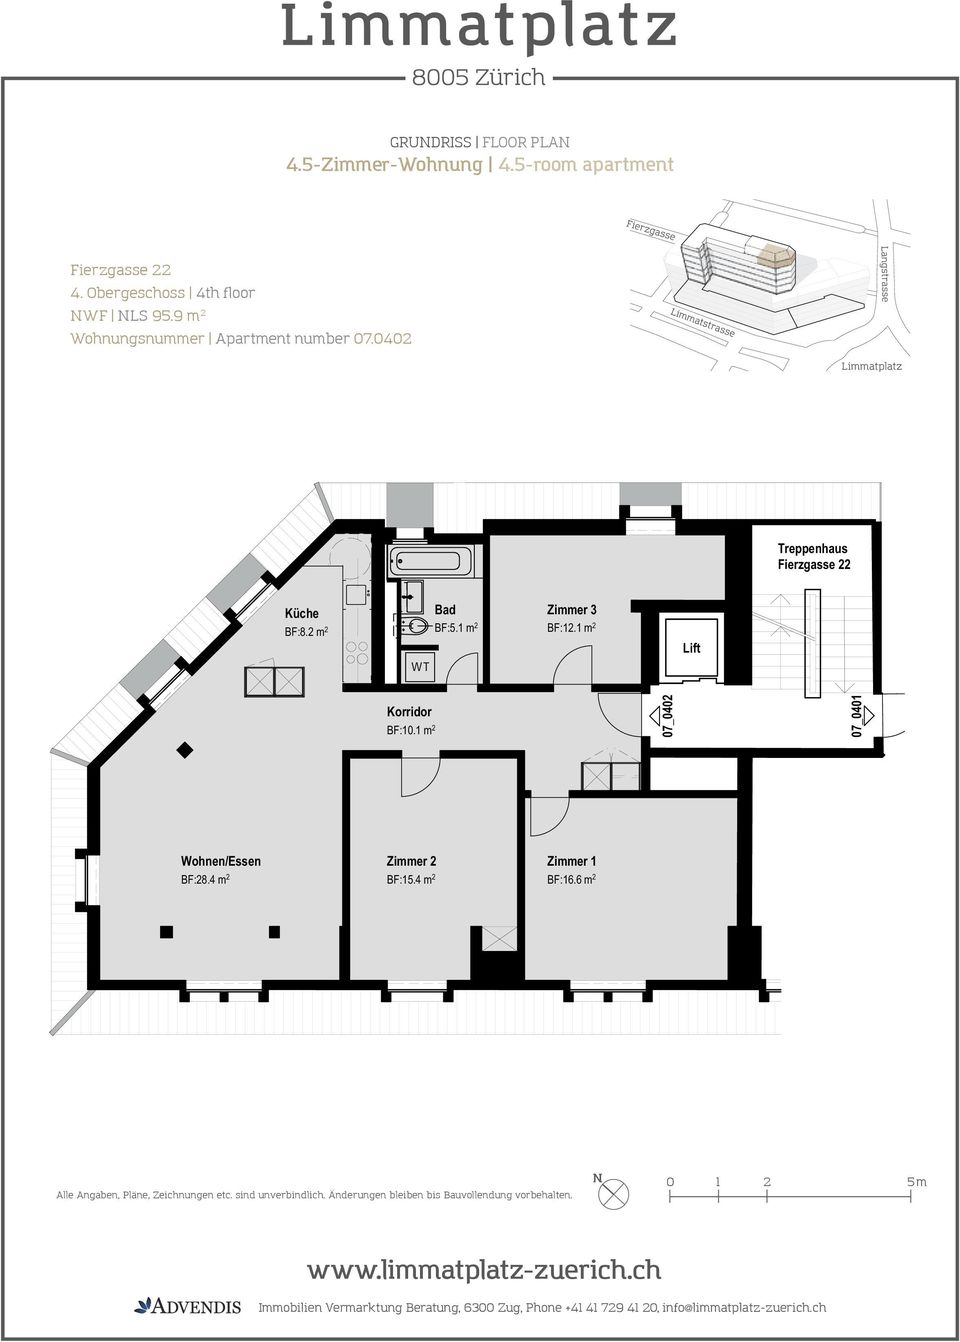 Grundriss Floor Plan 2 Zimmer Wohnung 2 Room Apartment Korridor